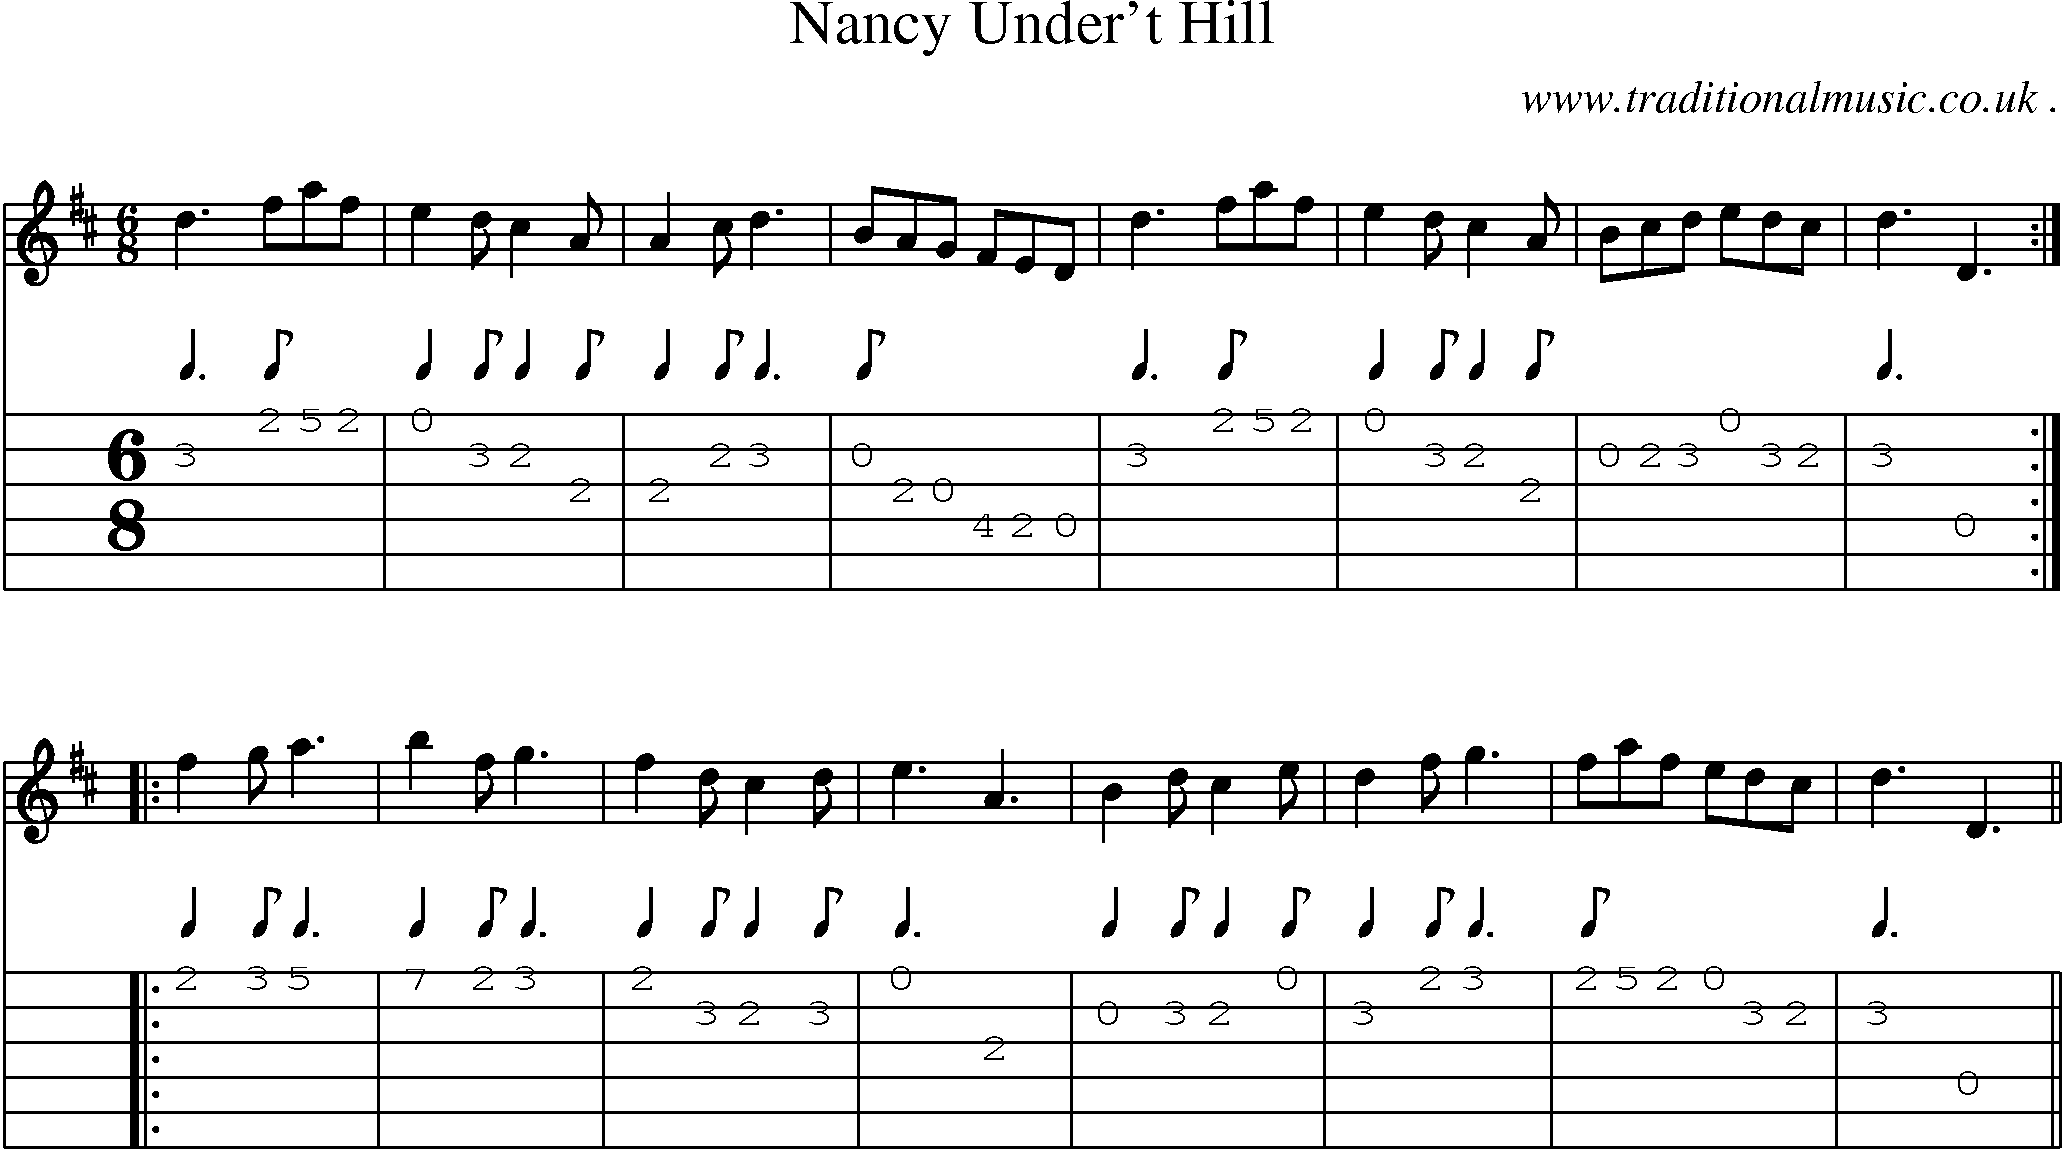 Sheet-Music and Guitar Tabs for Nancy Undert Hill